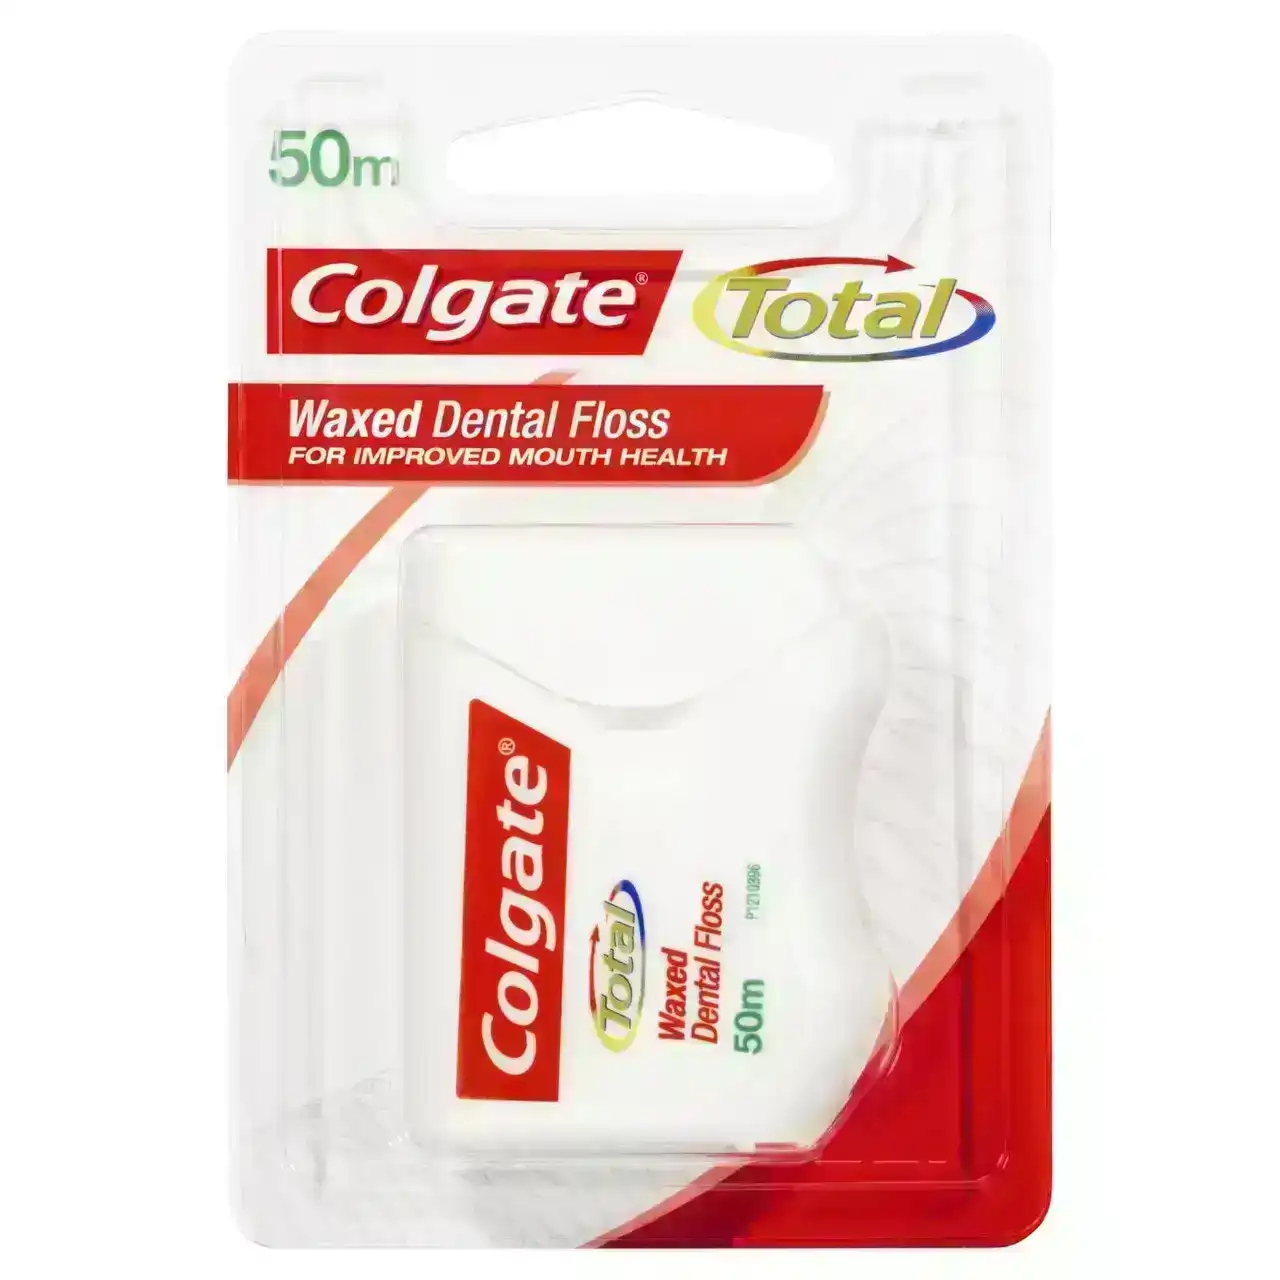 Colgate Total Waxed Dental Floss 50m